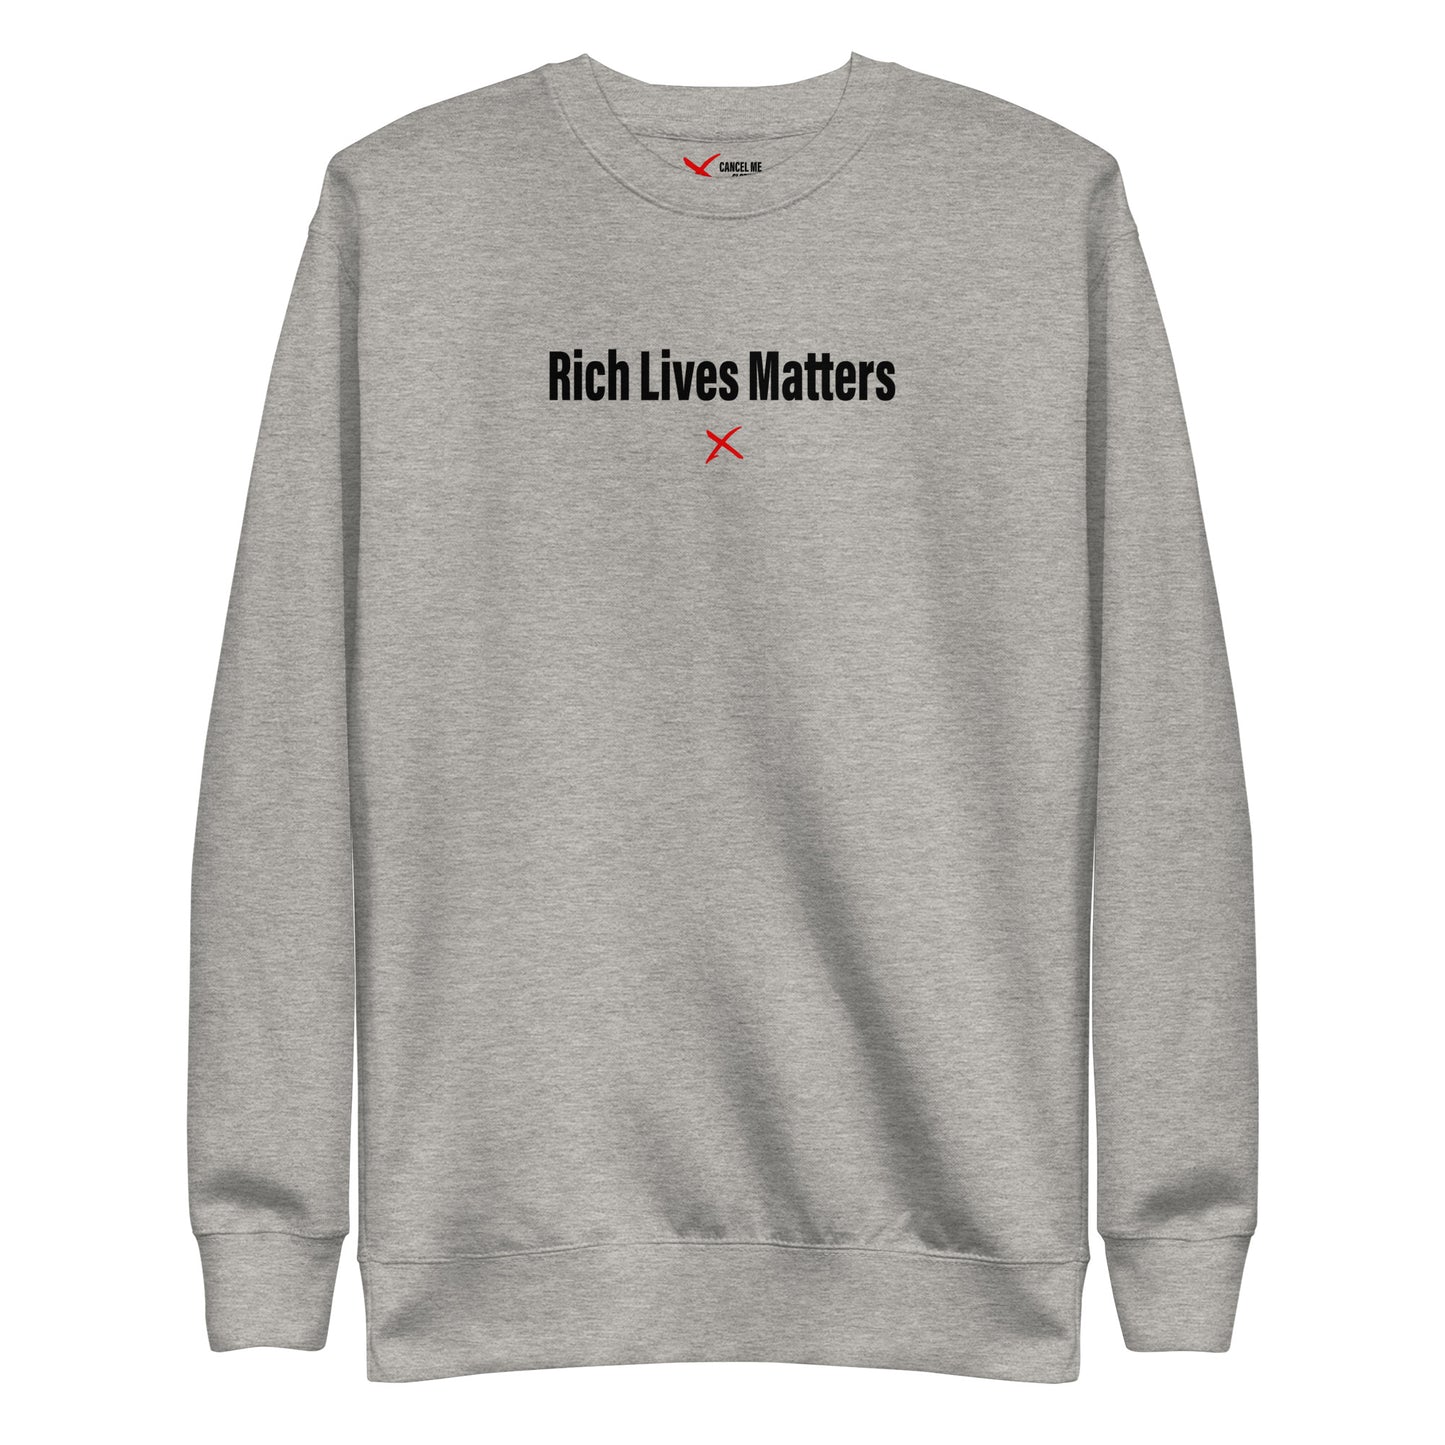 Rich Lives Matters - Sweatshirt